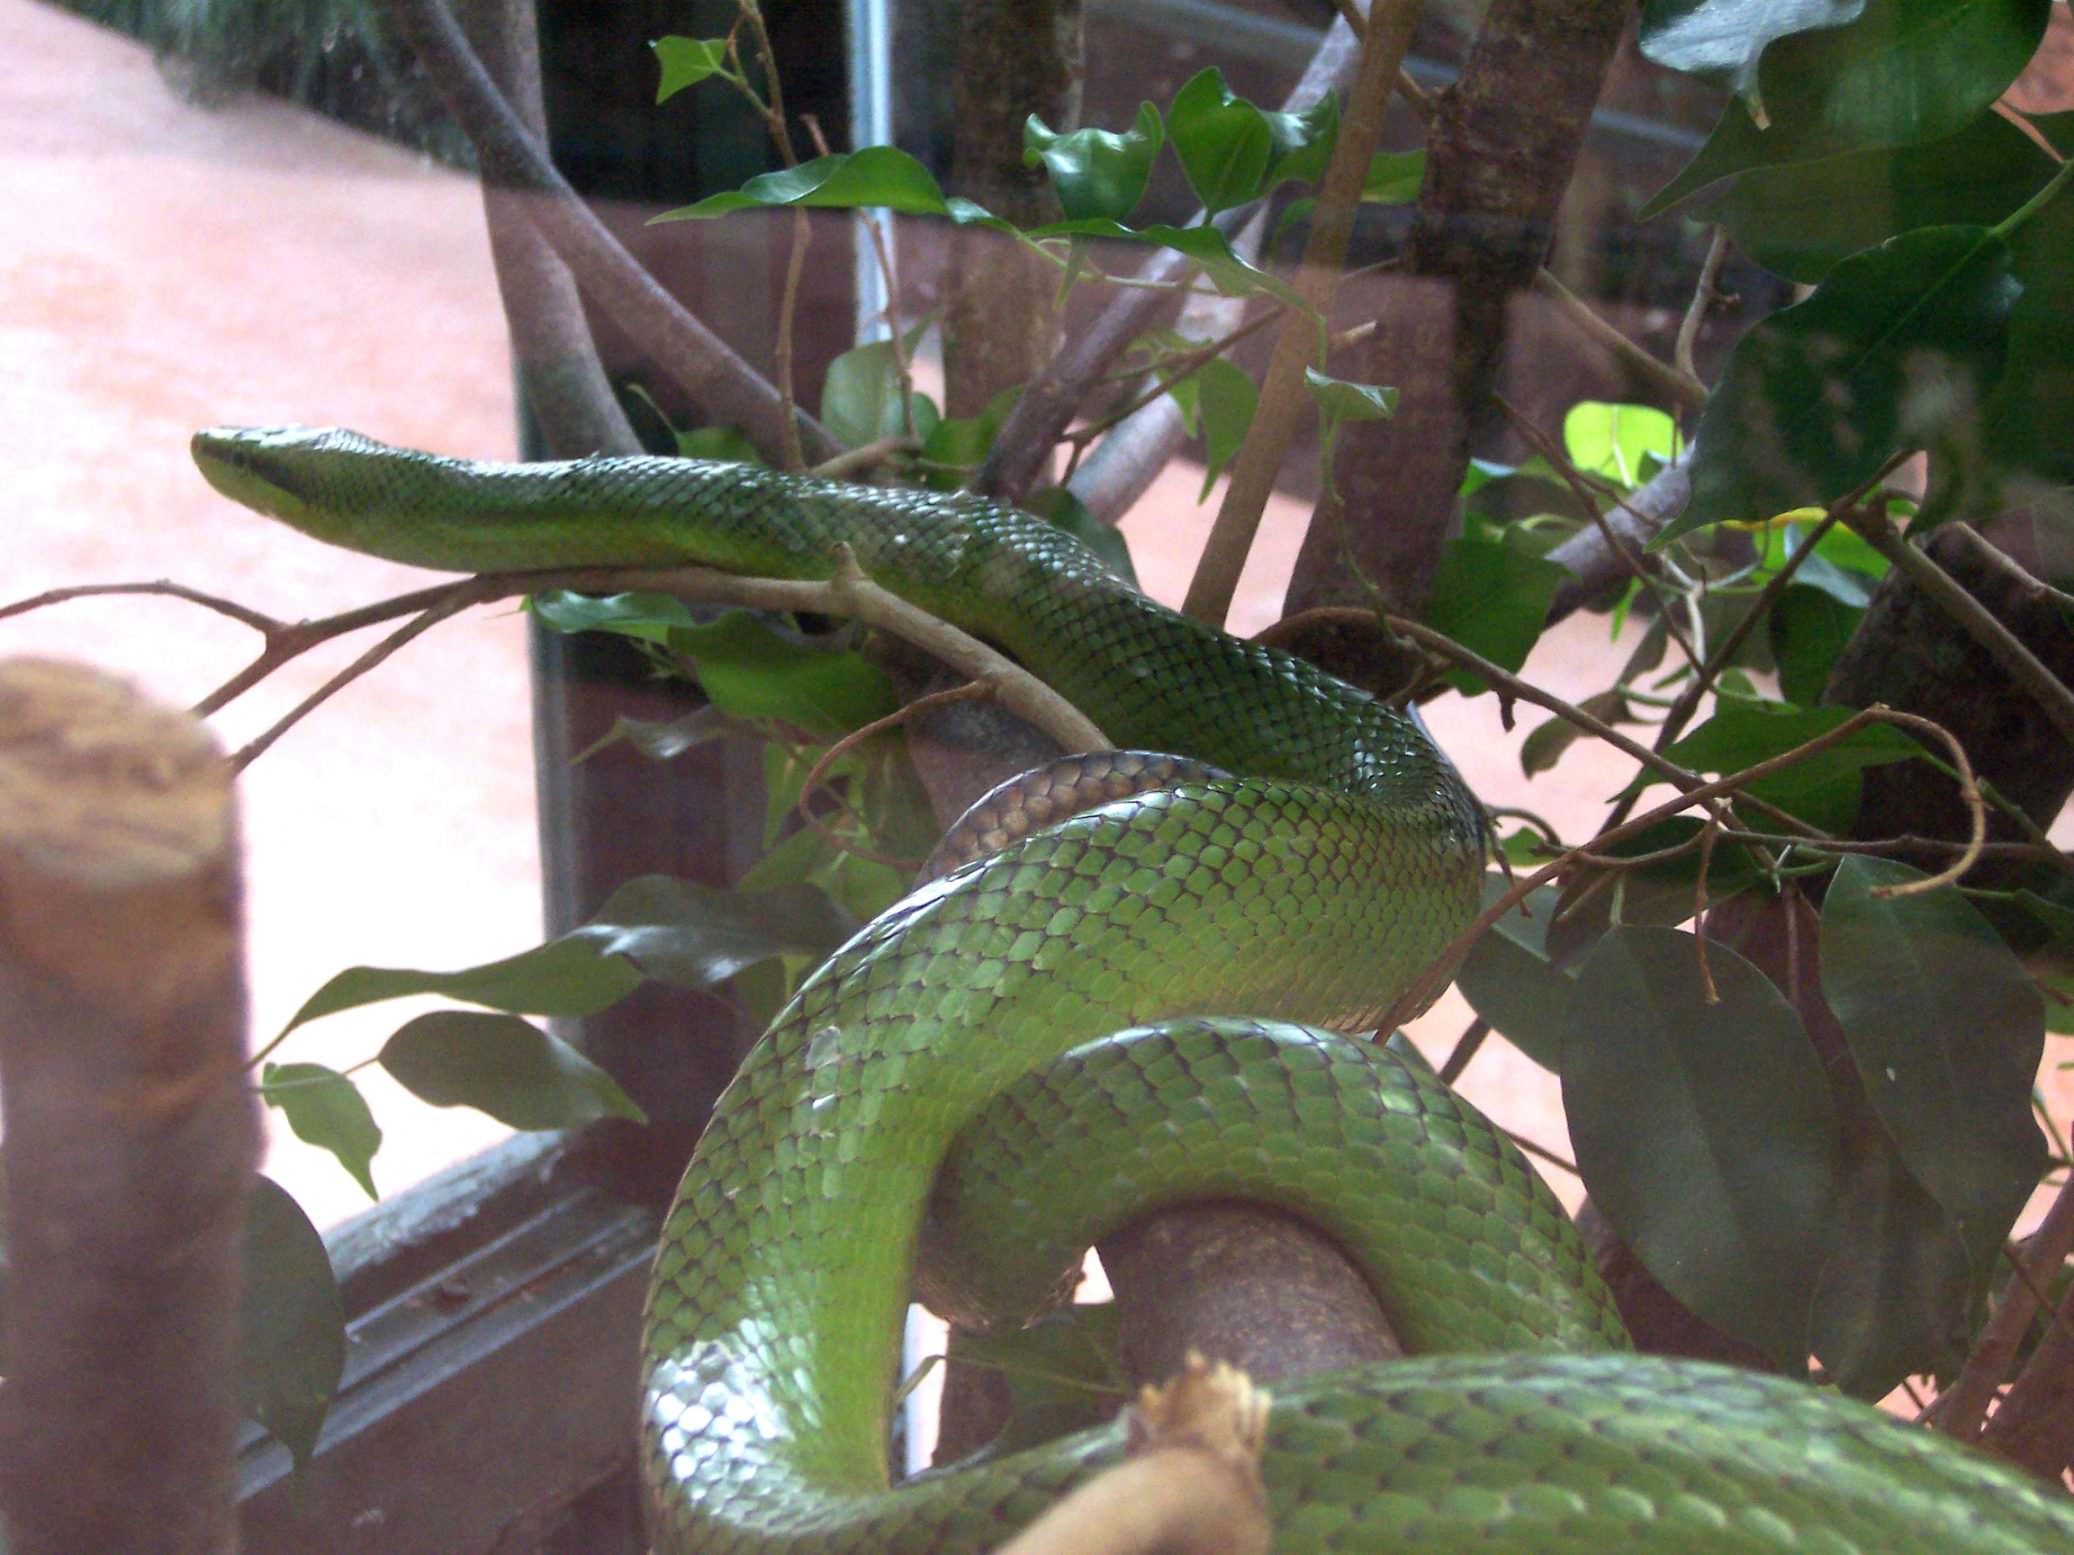 Serpents Python arboricole